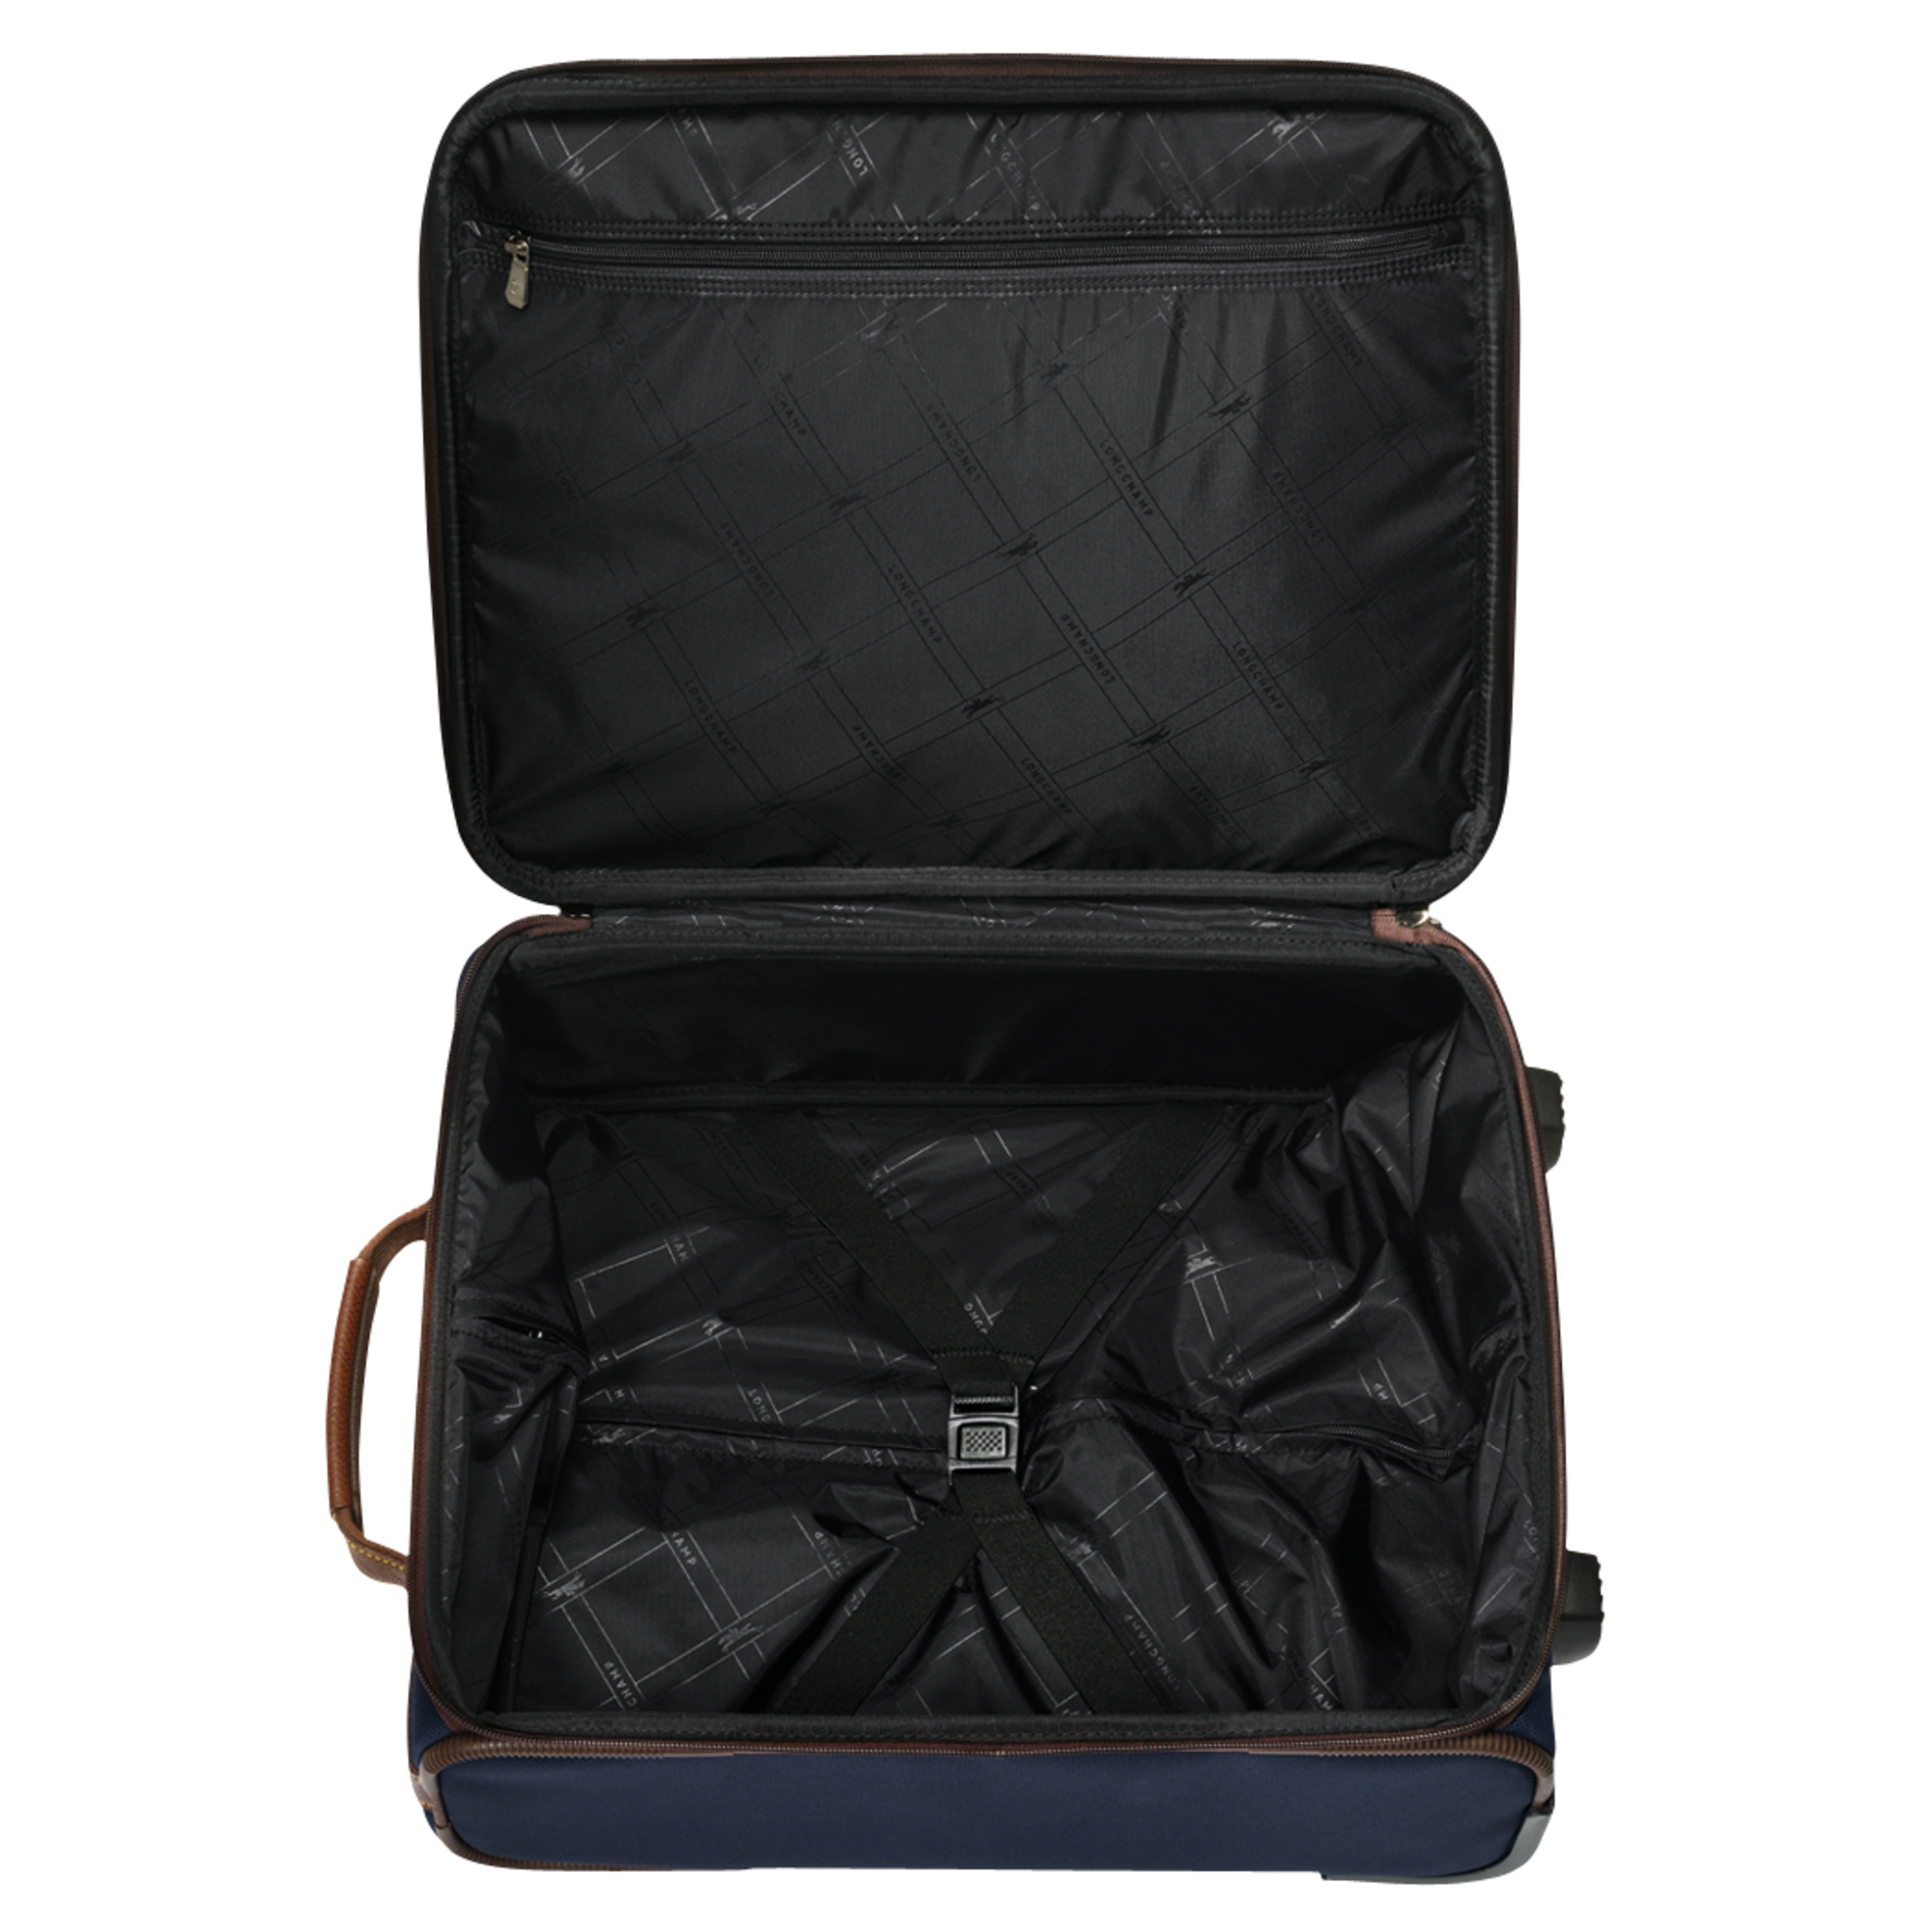 longchamps boxford small wheeled suitcase